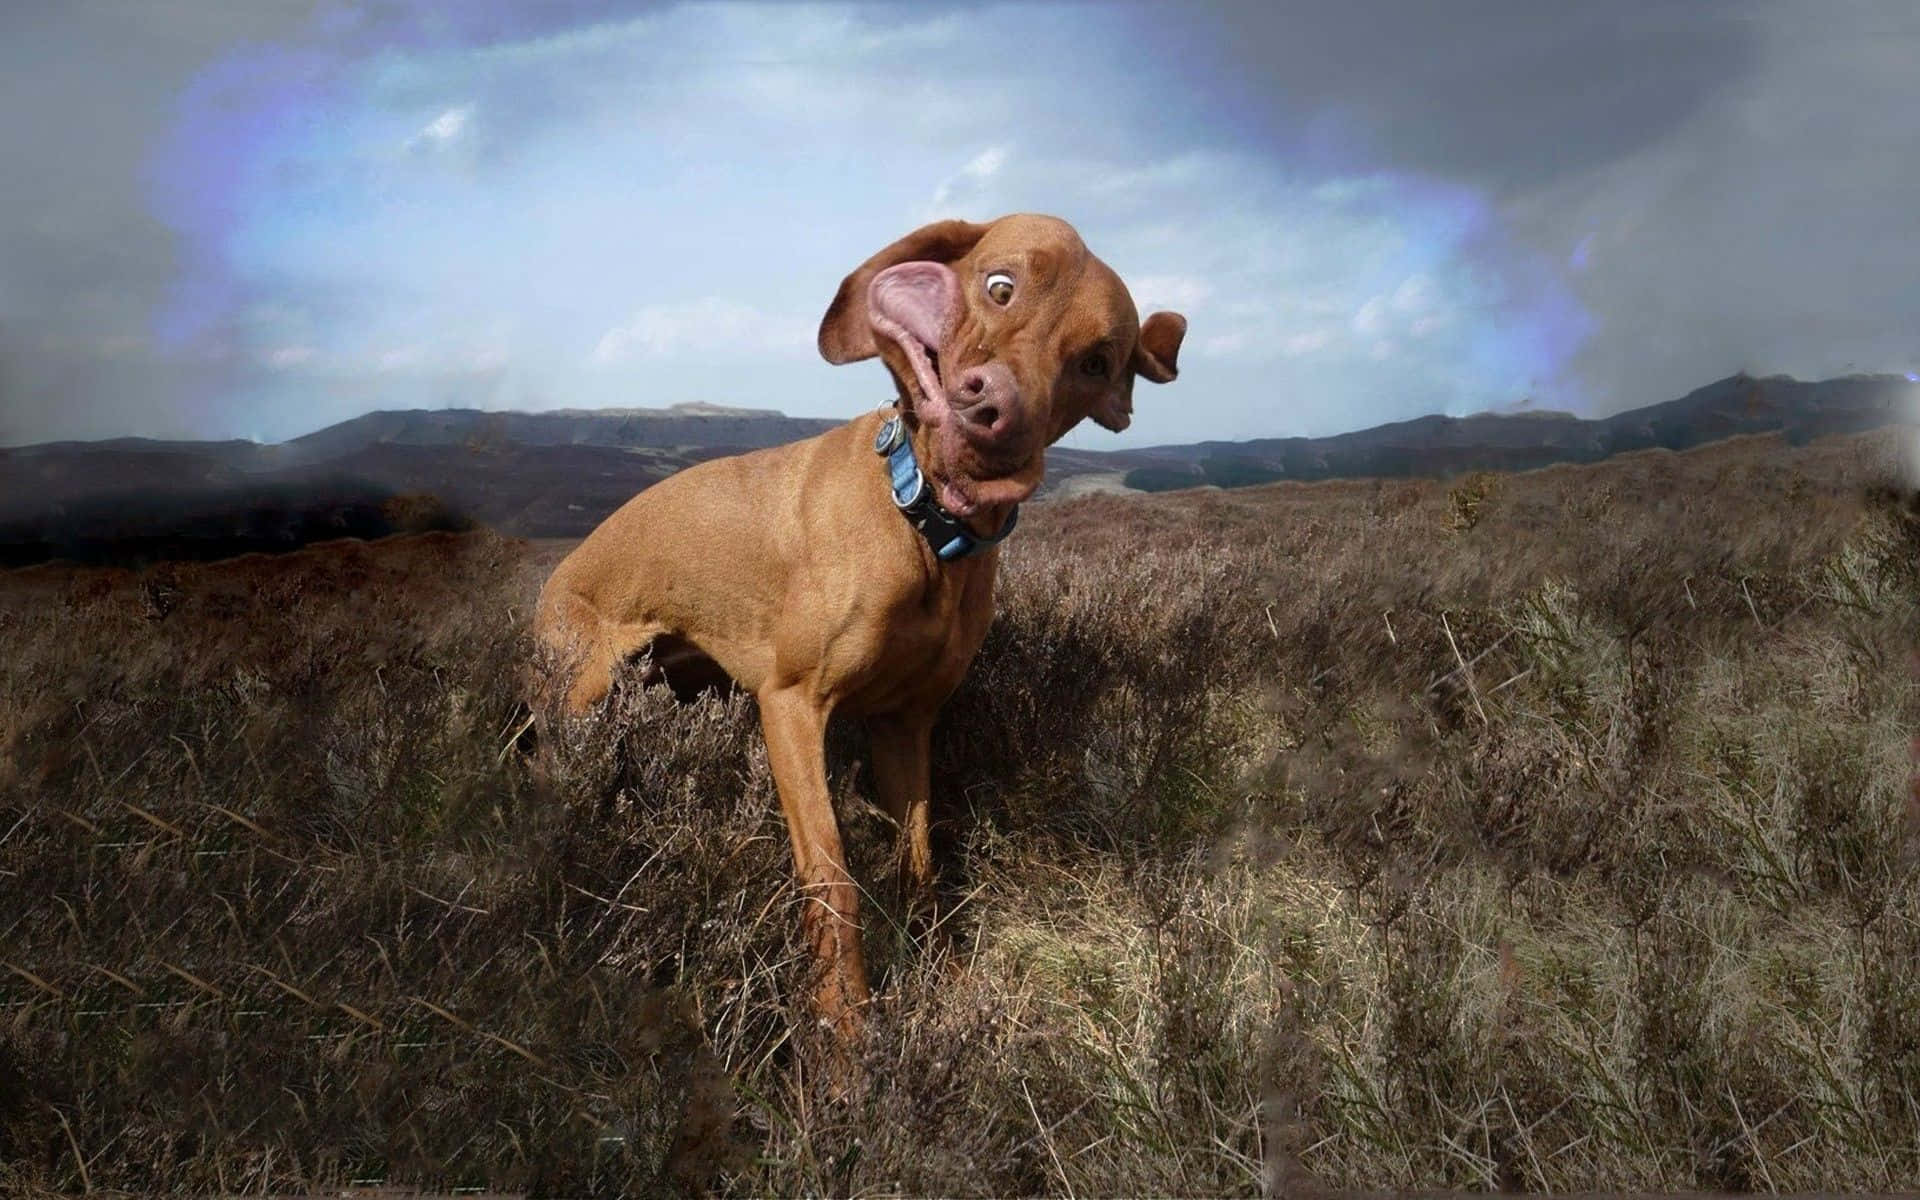 Caption: Unleashing The Joy: A Funny Dog In Playful Mood